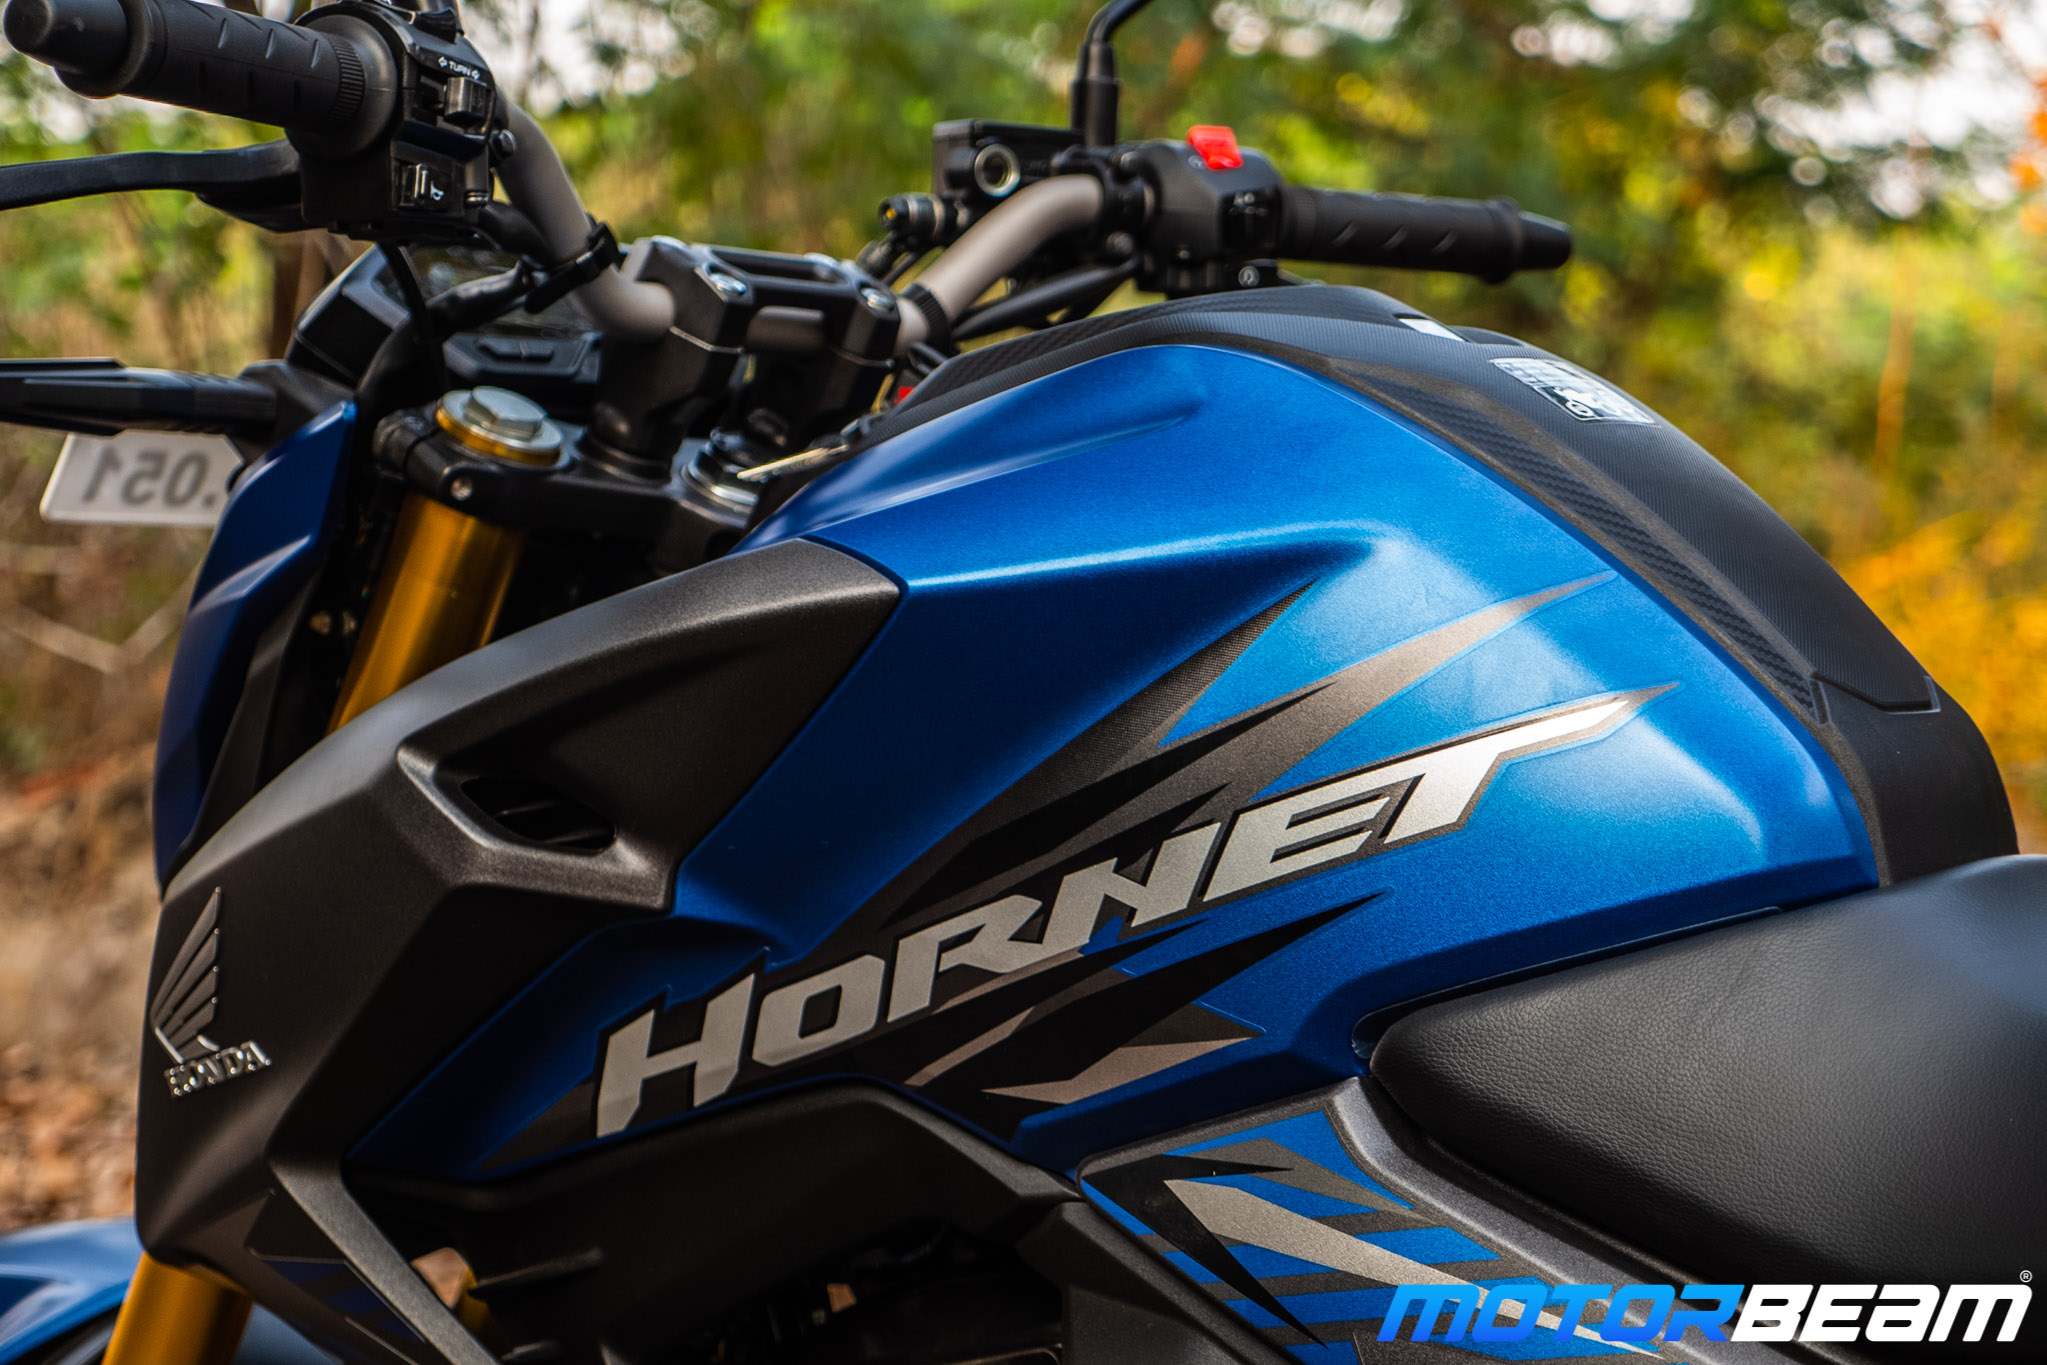 Honda Hornet 2.0 Review 33